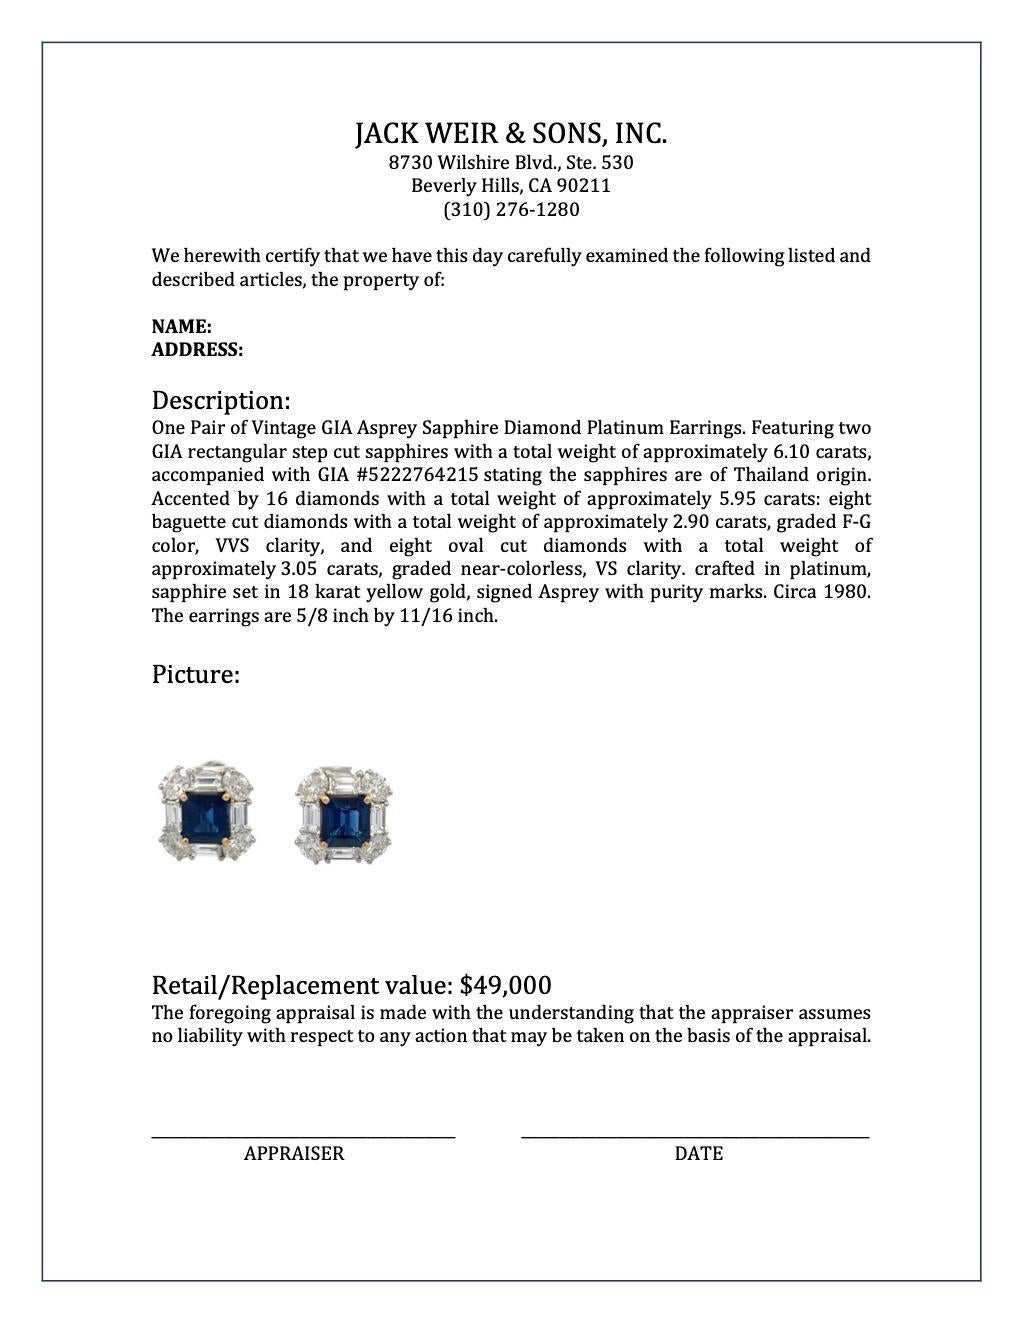 Vintage GIA Asprey Sapphire Diamond Platinum Earrings 3